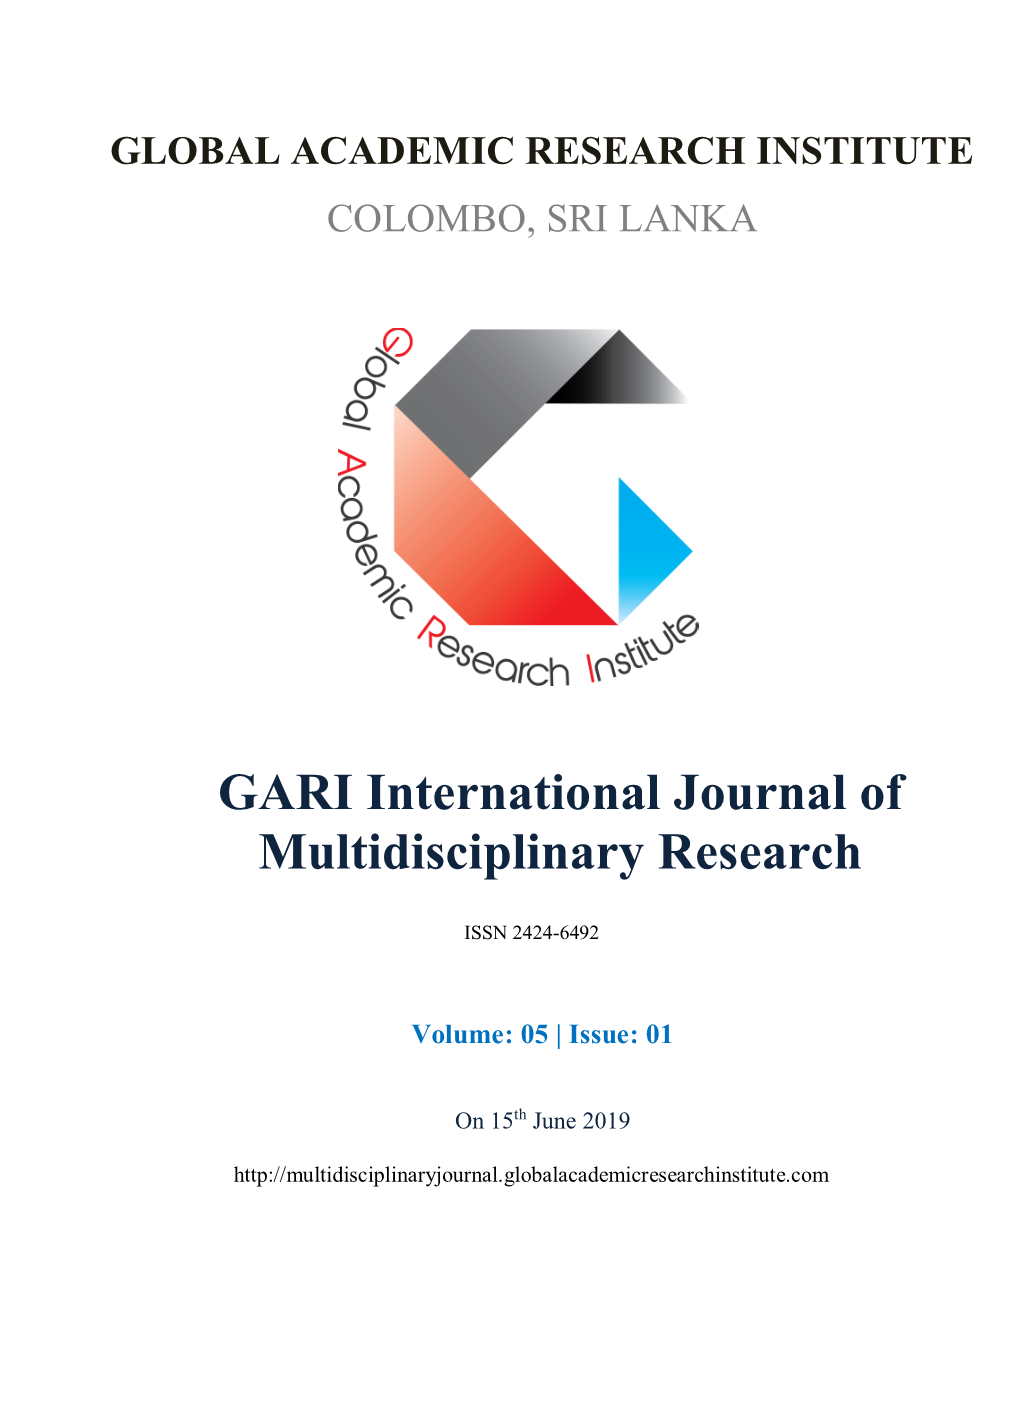 GARI International Journal of Multidisciplinary Research